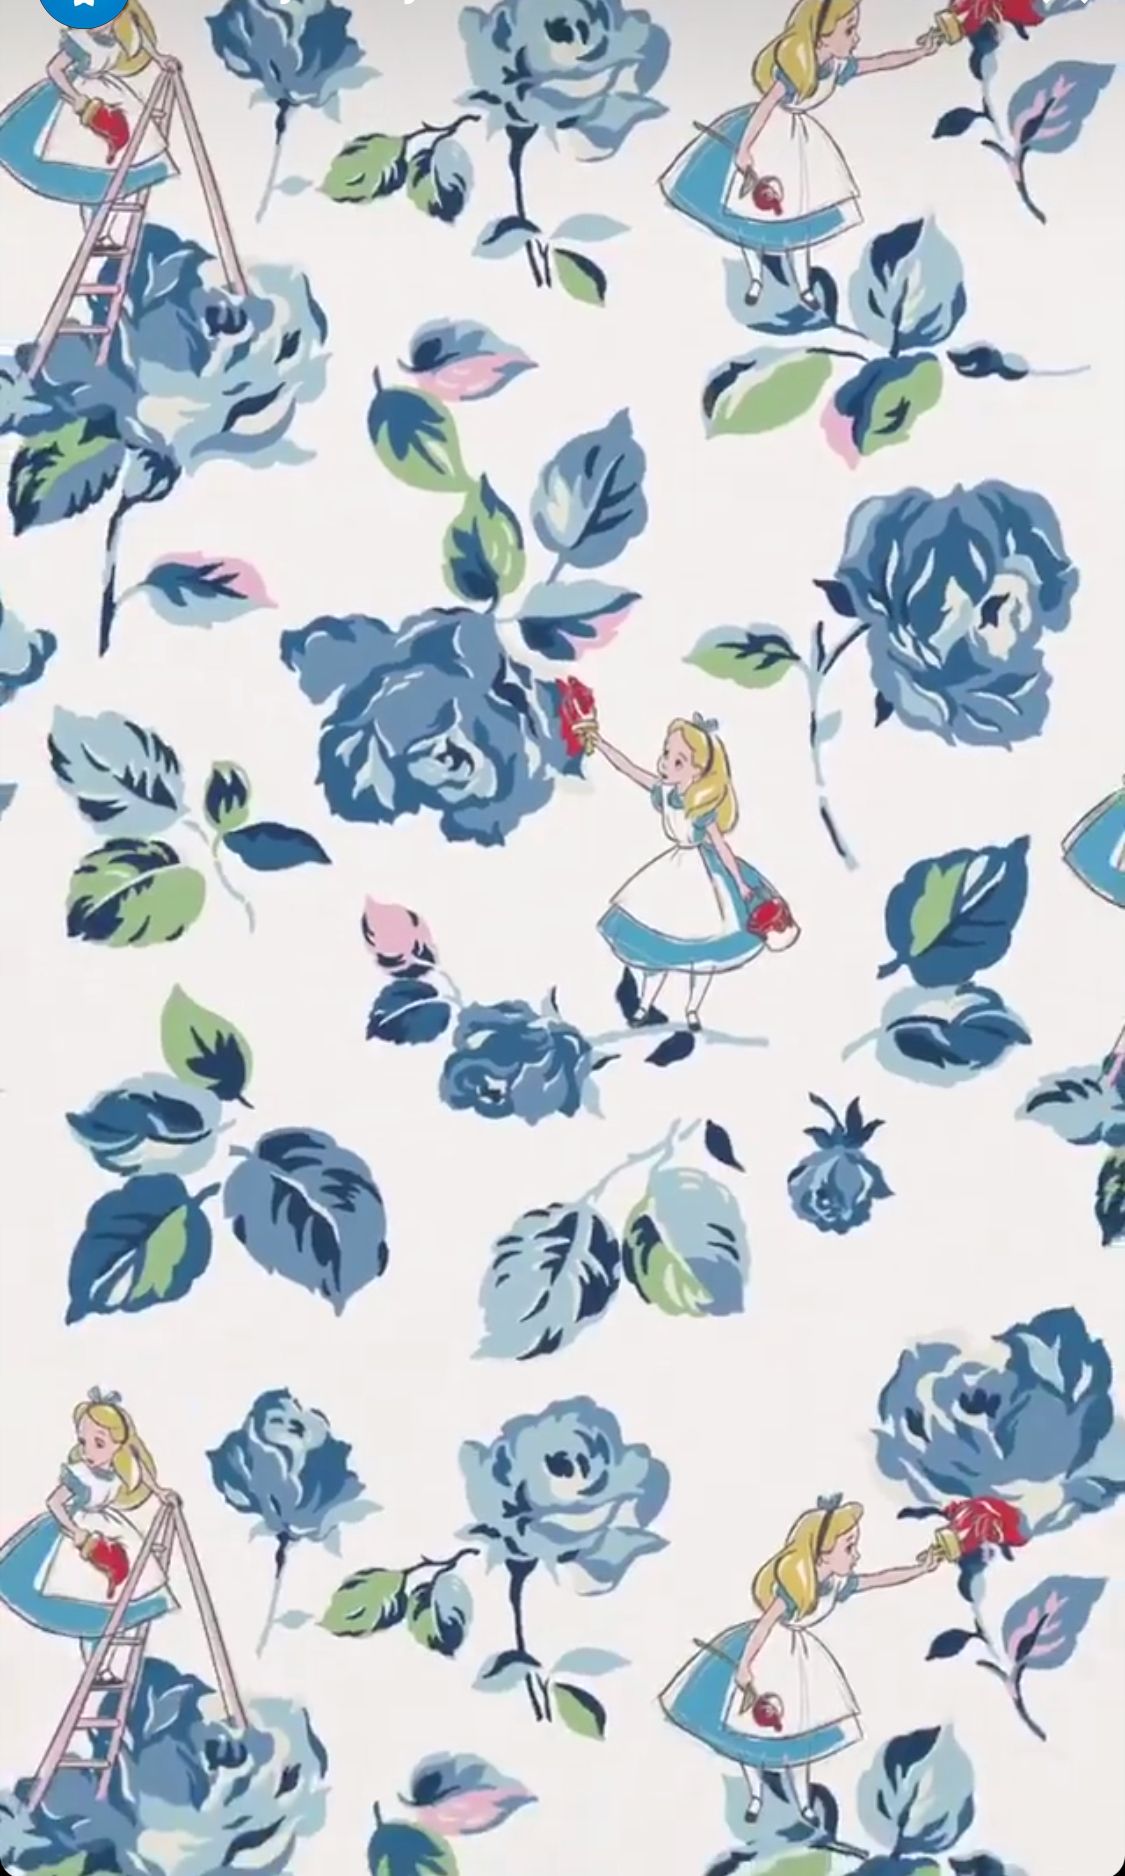 Iphone Alice In Wonderland Wallpapers